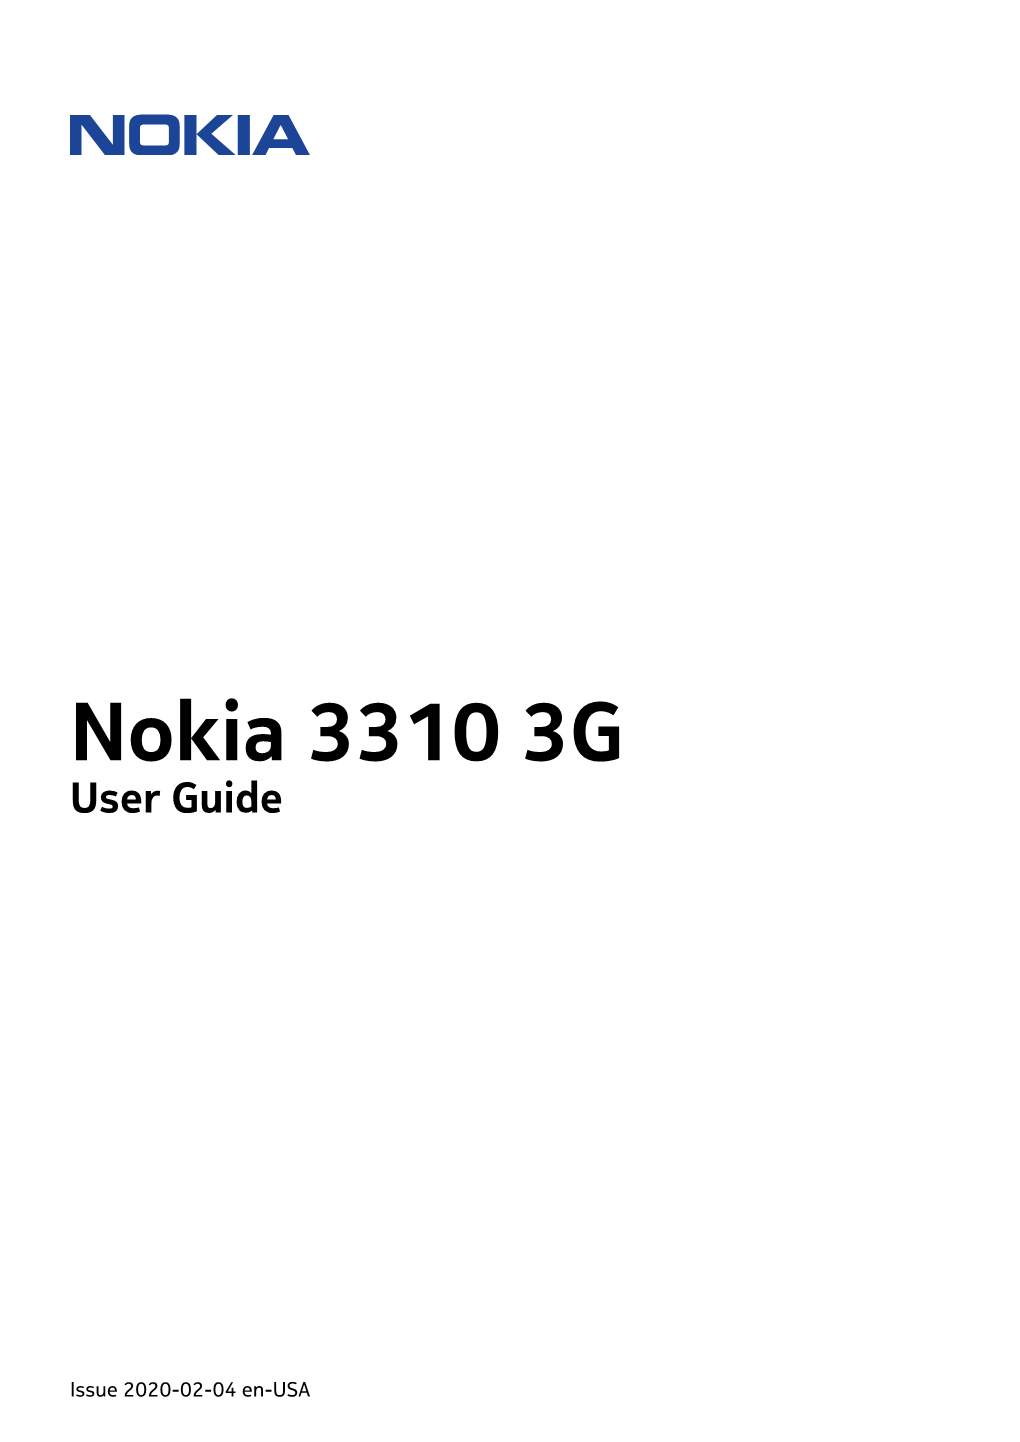 Nokia 3310 3G User Guide